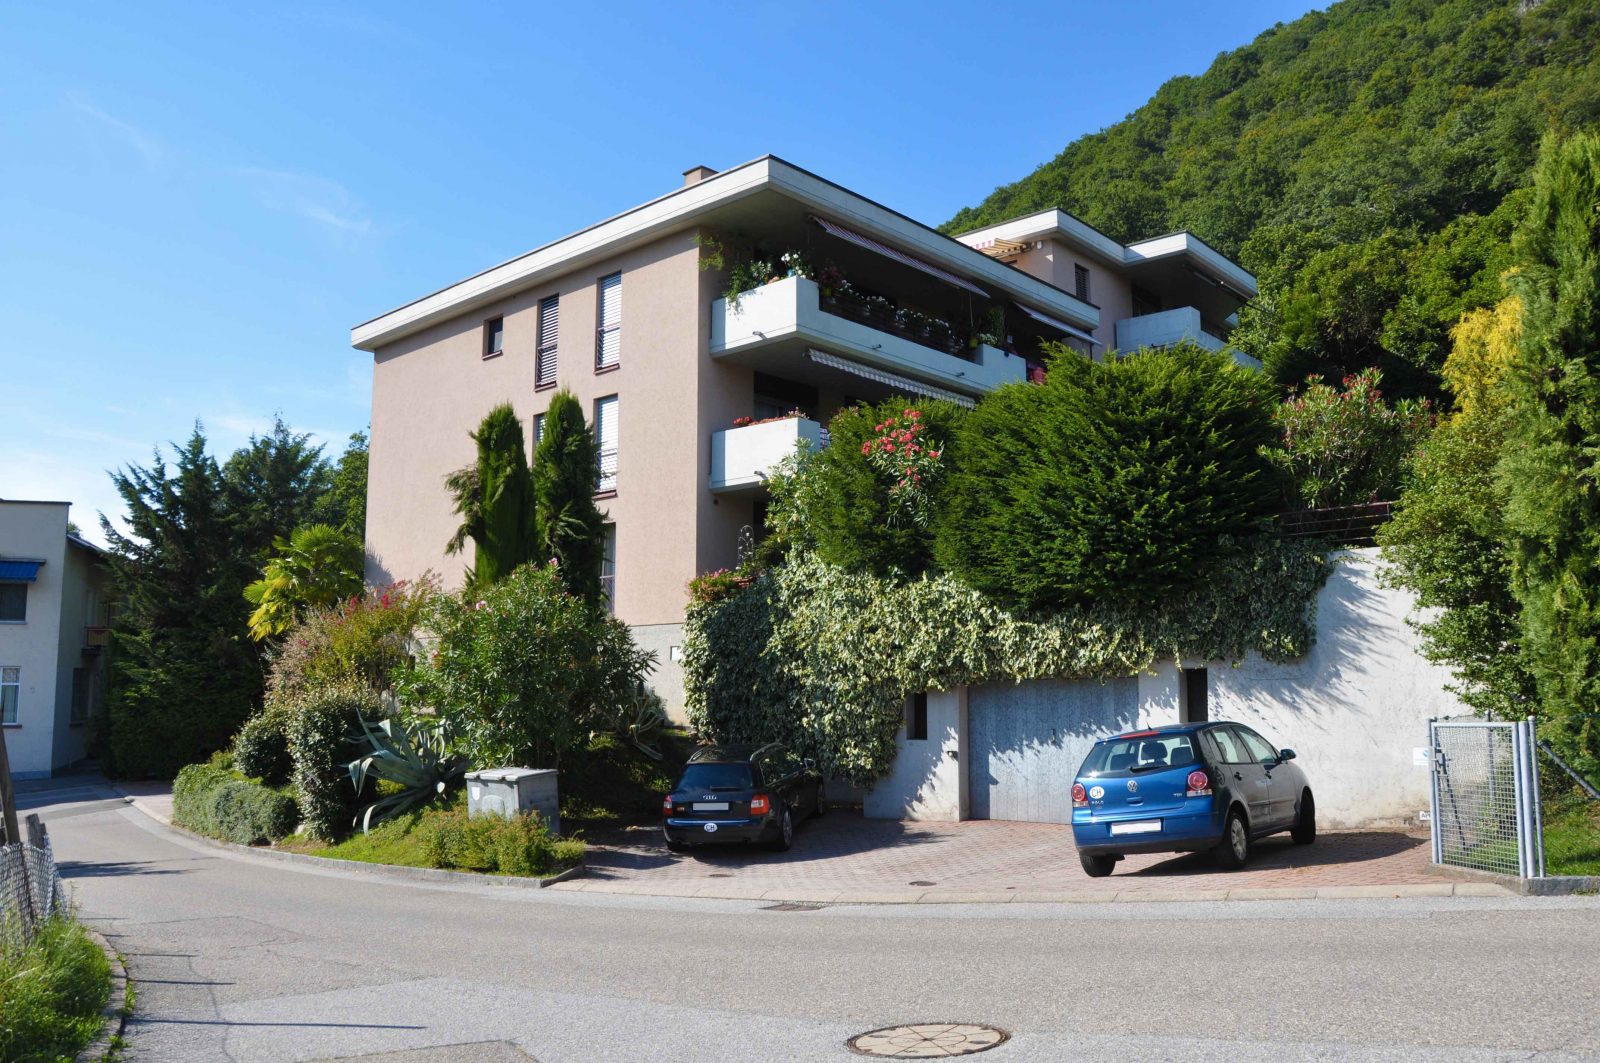 Affittasi 2 locali in zona tranquilla a Ponte Tresa Svizzera, in collina #3